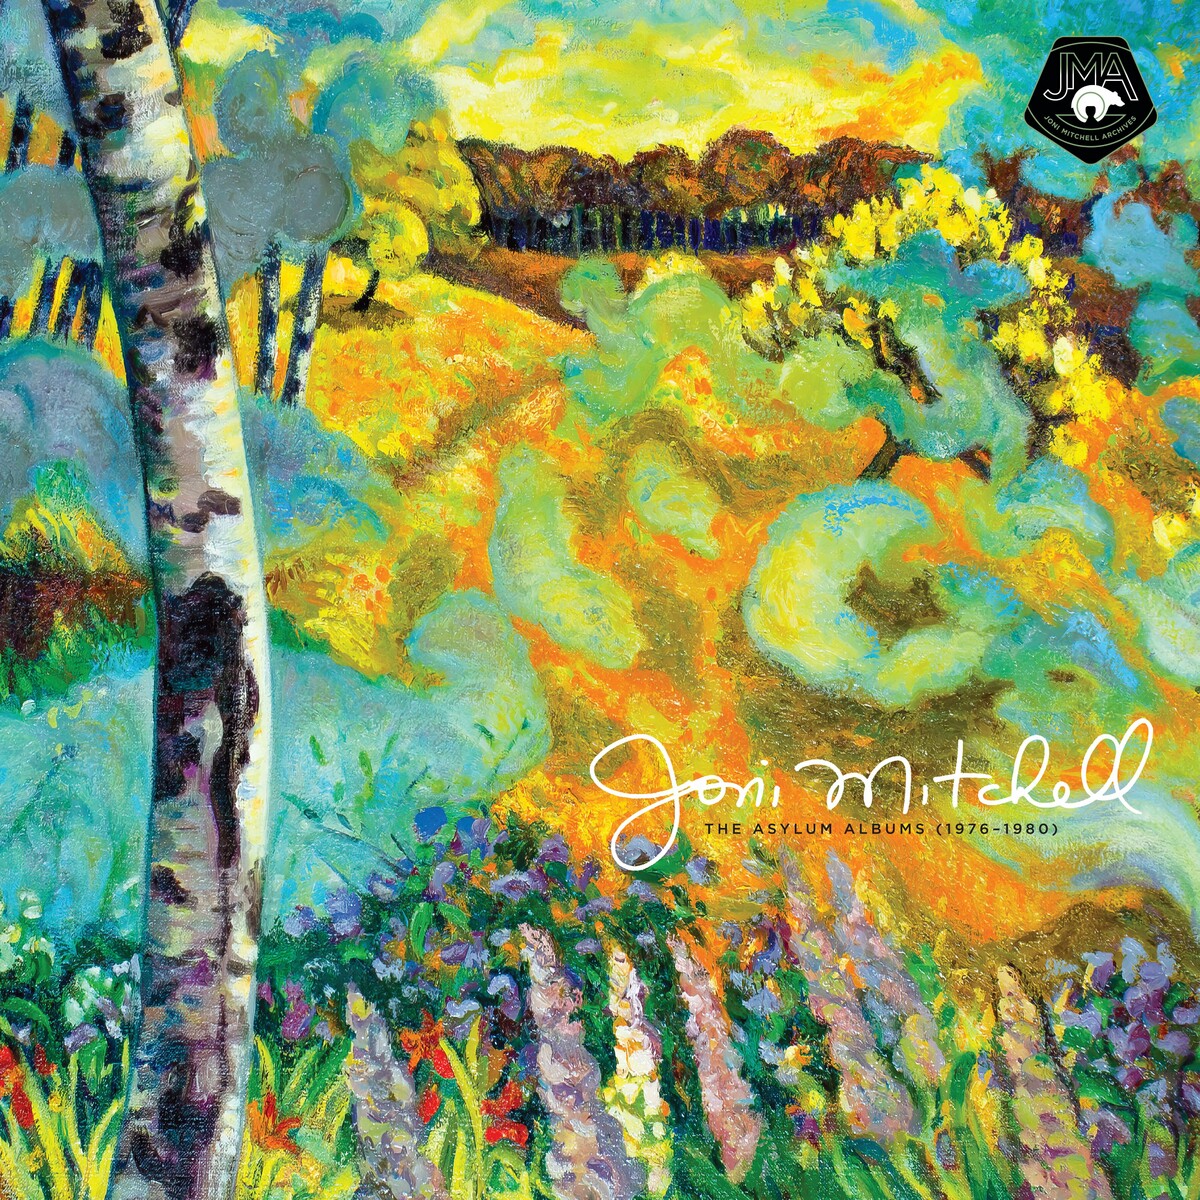 Joni Mitchell - The Asylum Albums (1976-1980) (remastered)